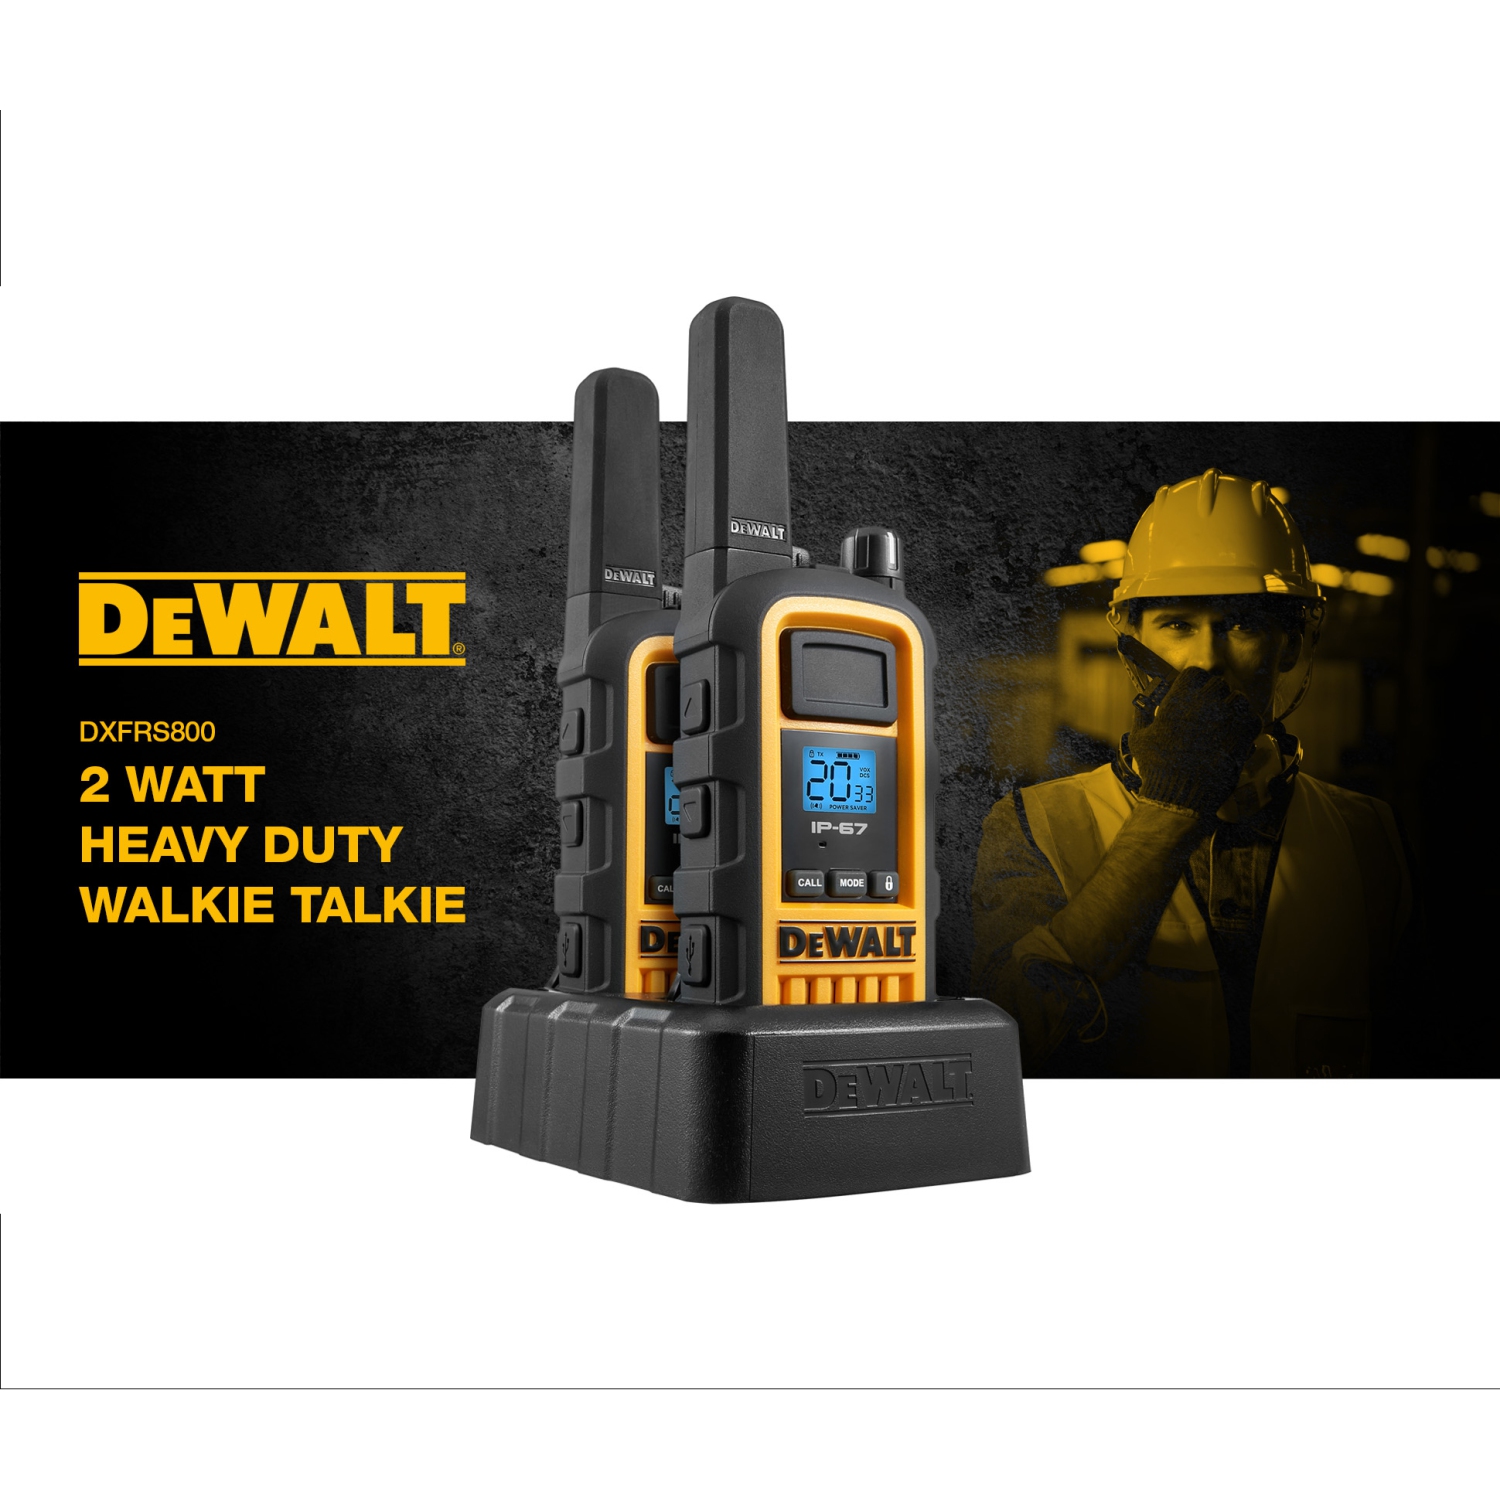 DEWALT DXFRS300 Bundle 1W Walkie Talkies Heavy Duty Business Two-Way Radios, Pack with Headsets (1DXFRS300-SV1) - 1